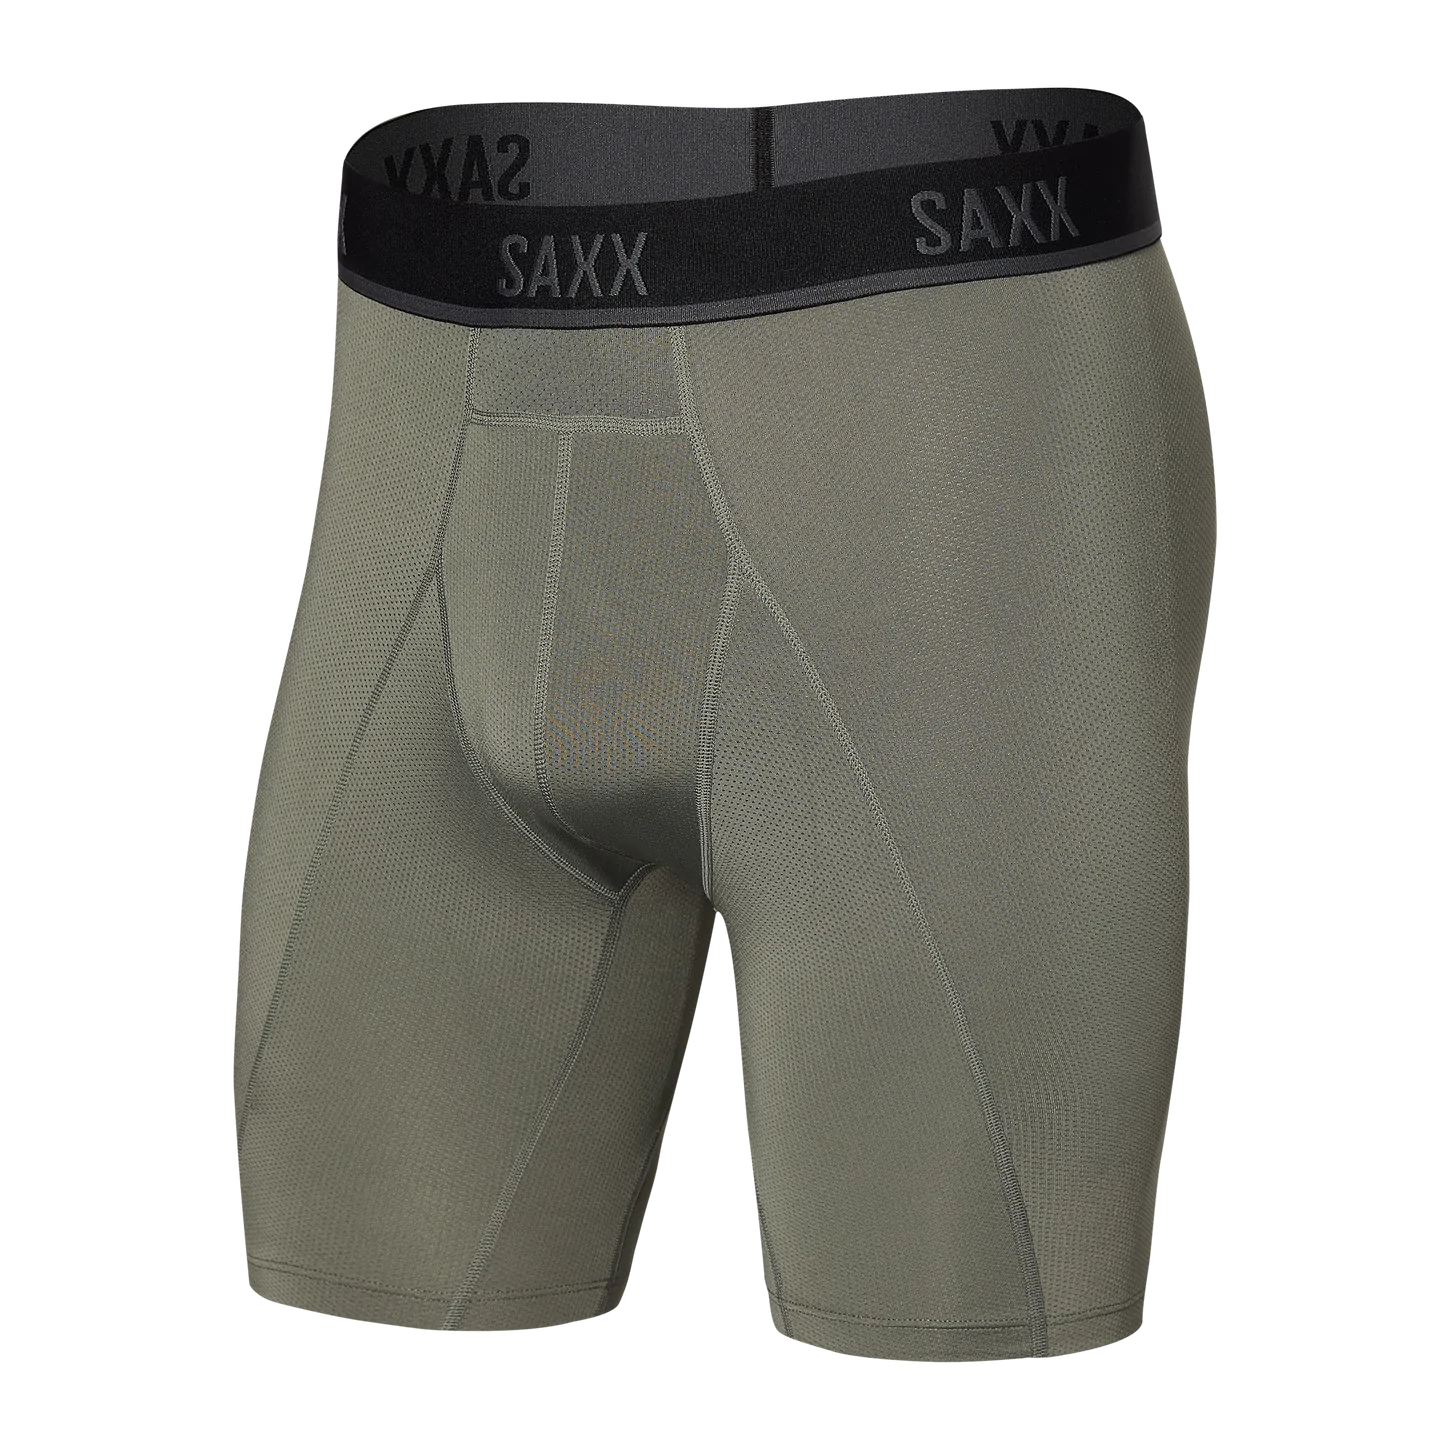 SAXX Kinetic Light Compression Mesh Long Leg - Cargo Grey - Cargo Grey - 1 - Underwear - Long Leg Boxer Briefs